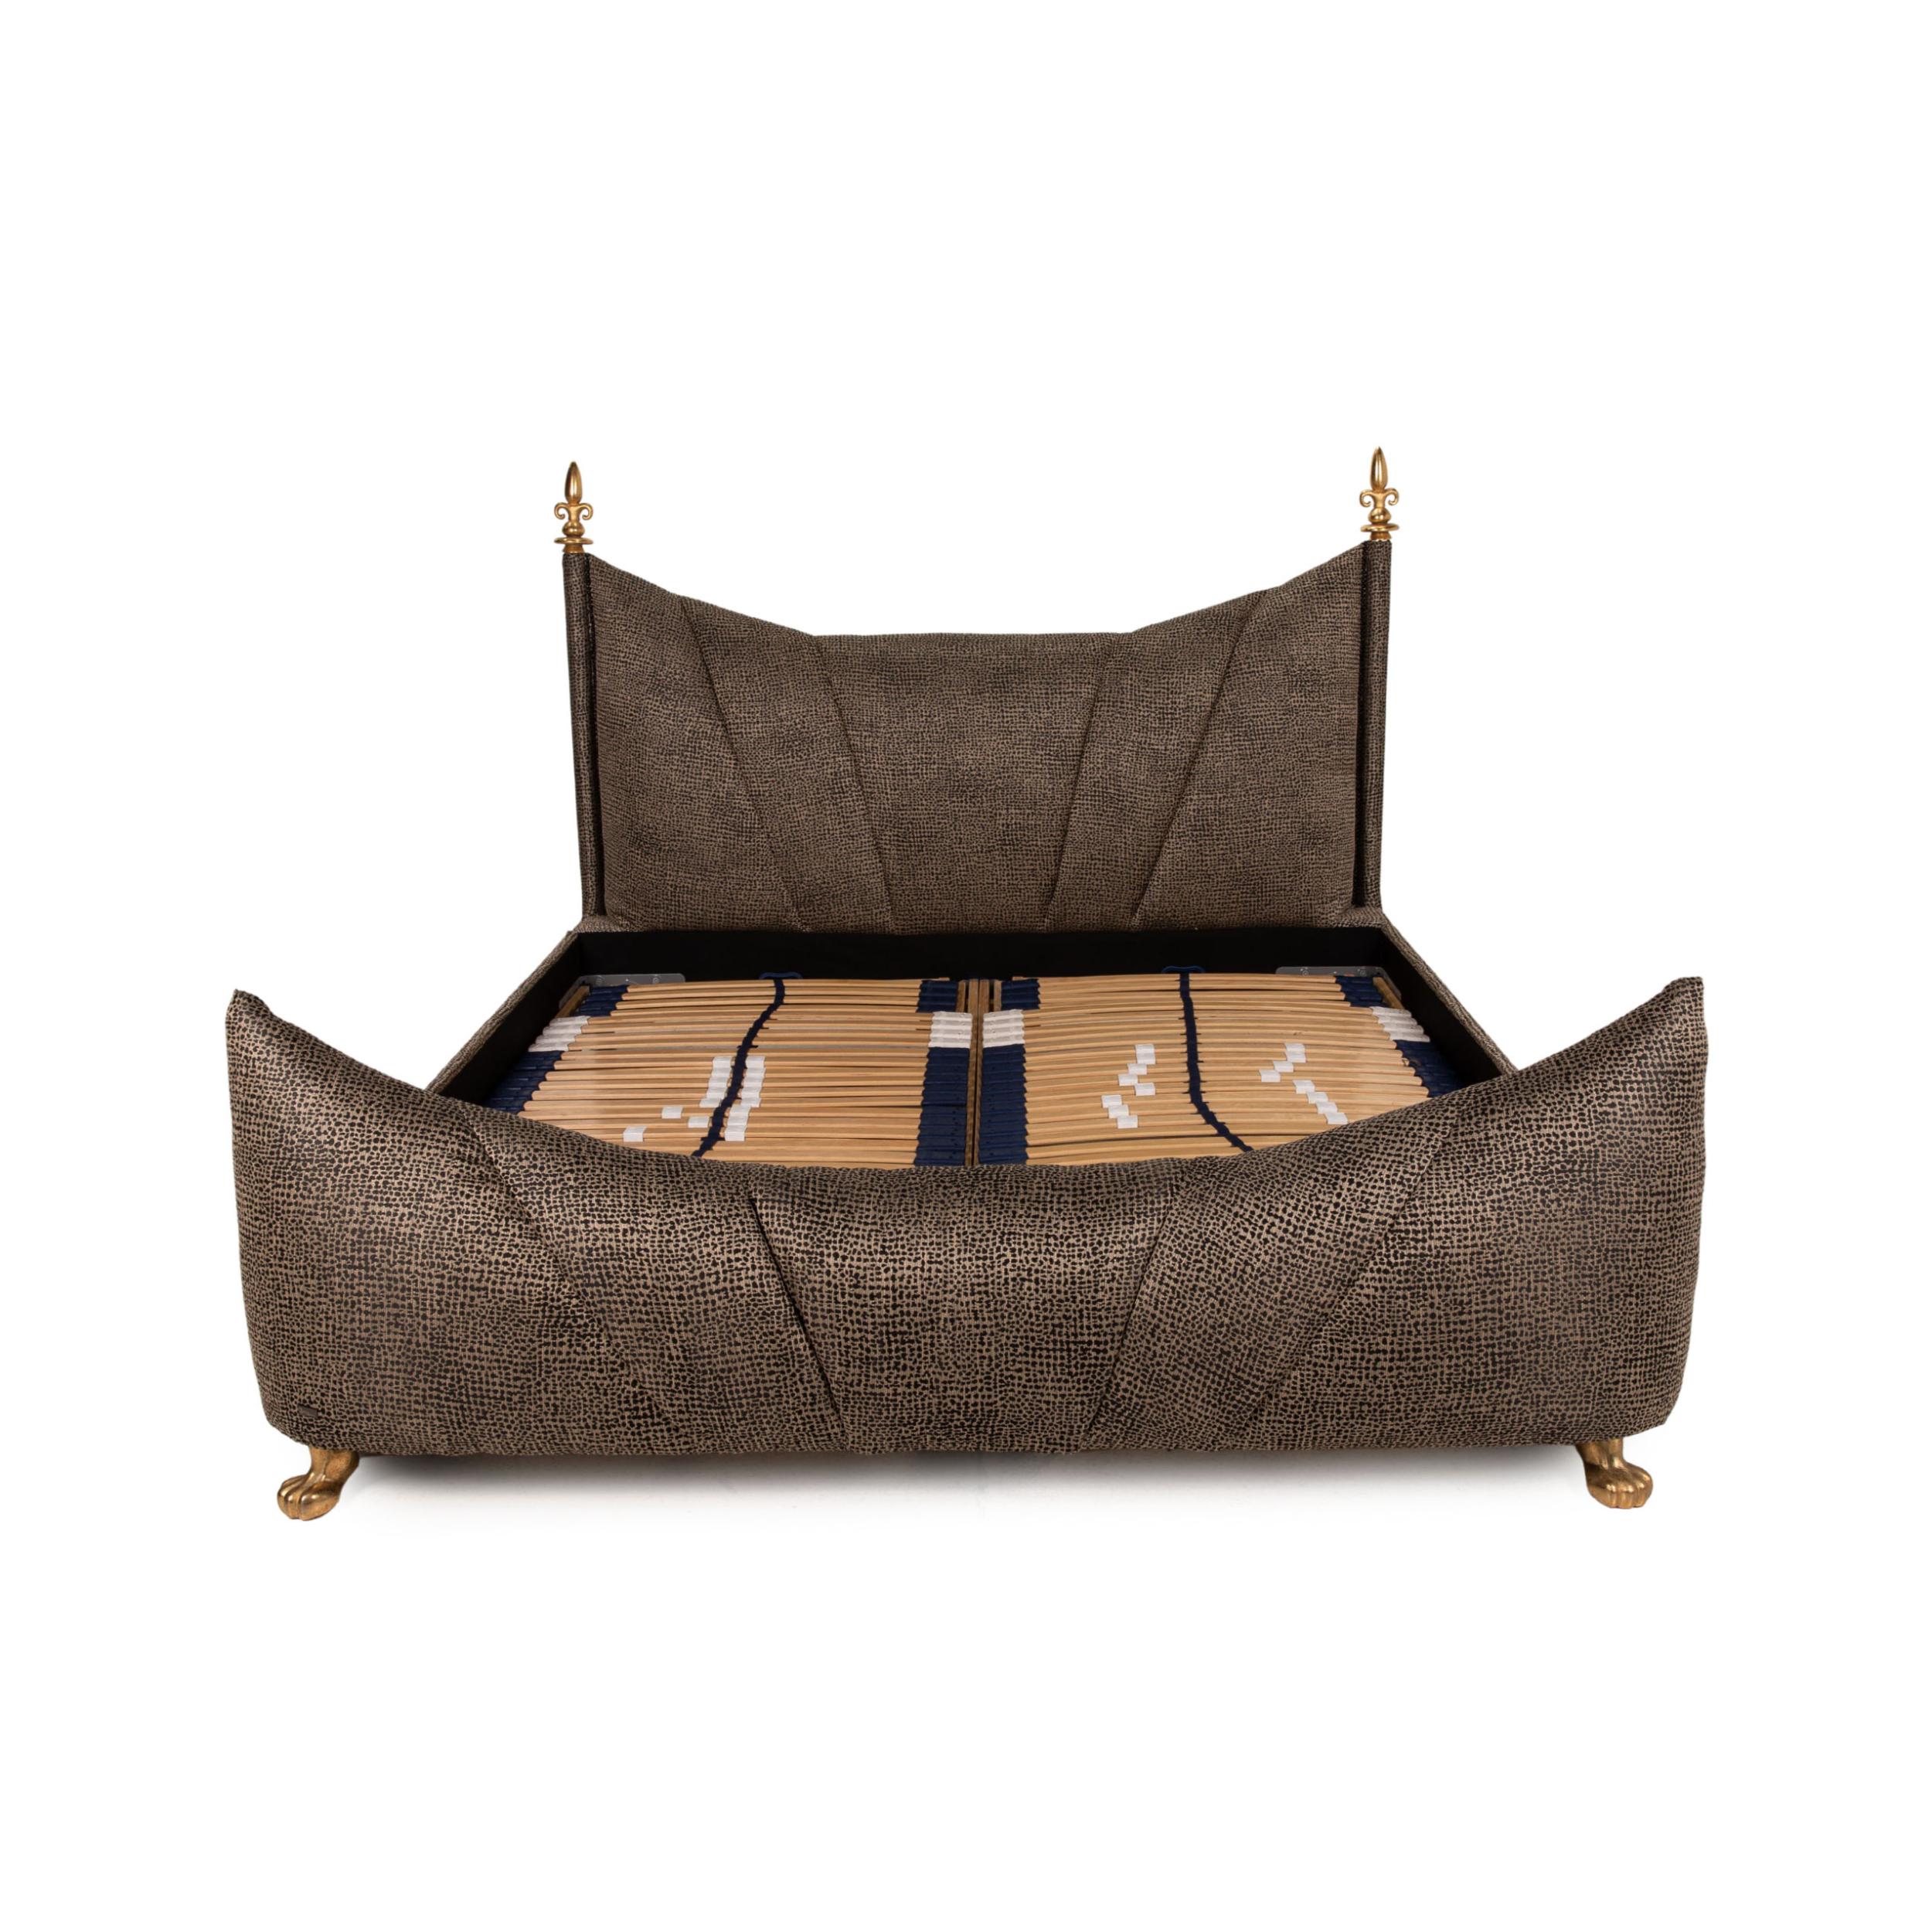 German Bretz Ali Baba Velvet Bed Brown Double Bed For Sale